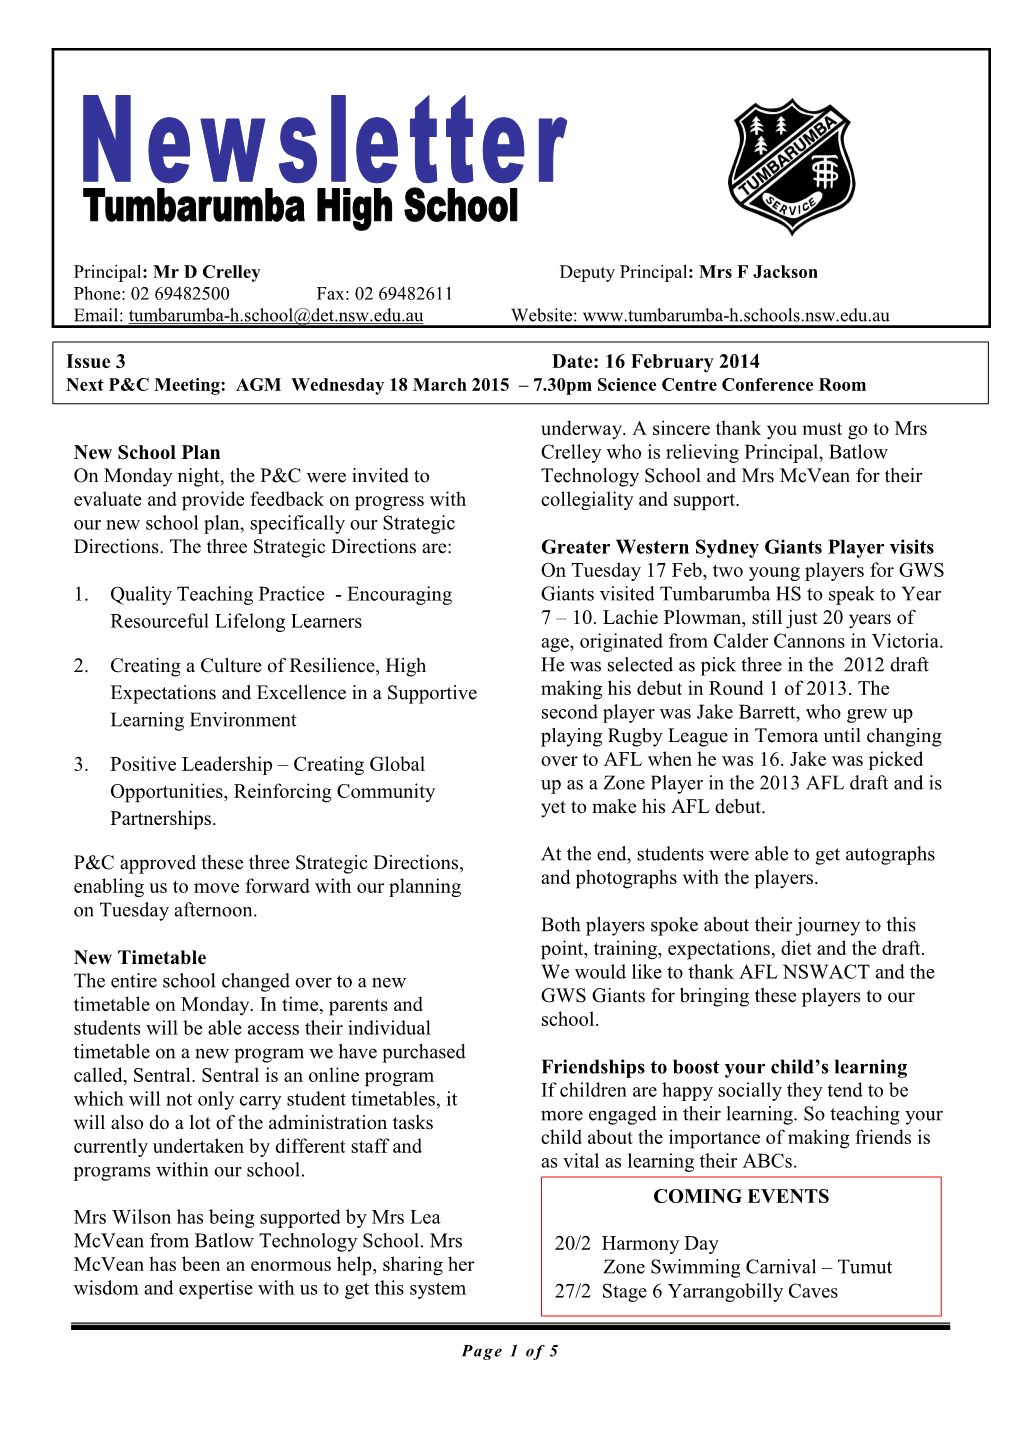 Tumbarumba High School Newsletter Template